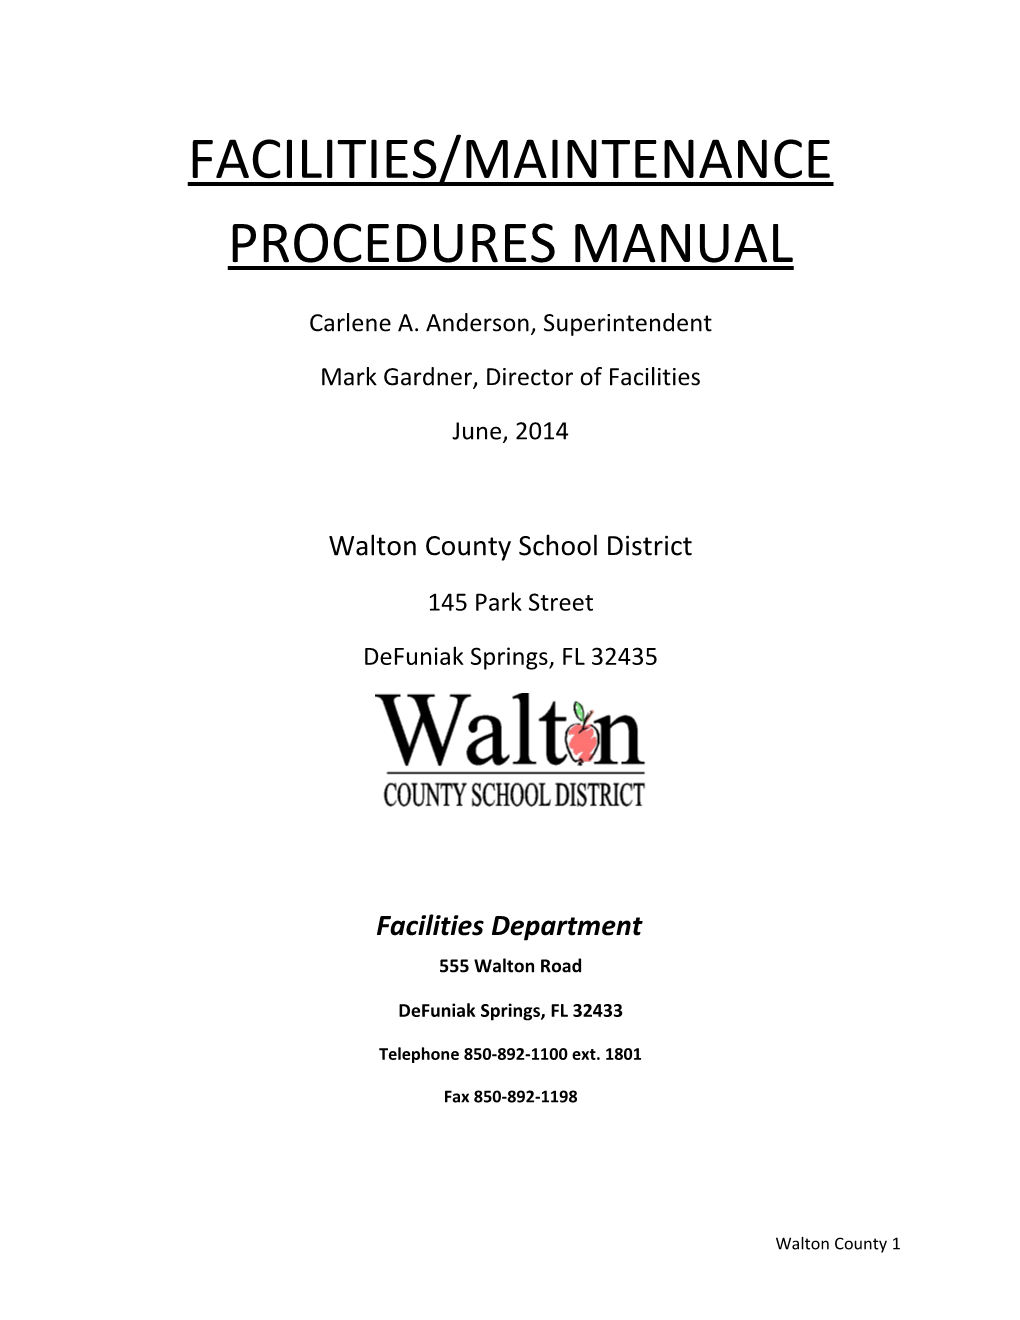 Facilities/Maintenance Procedures Manual